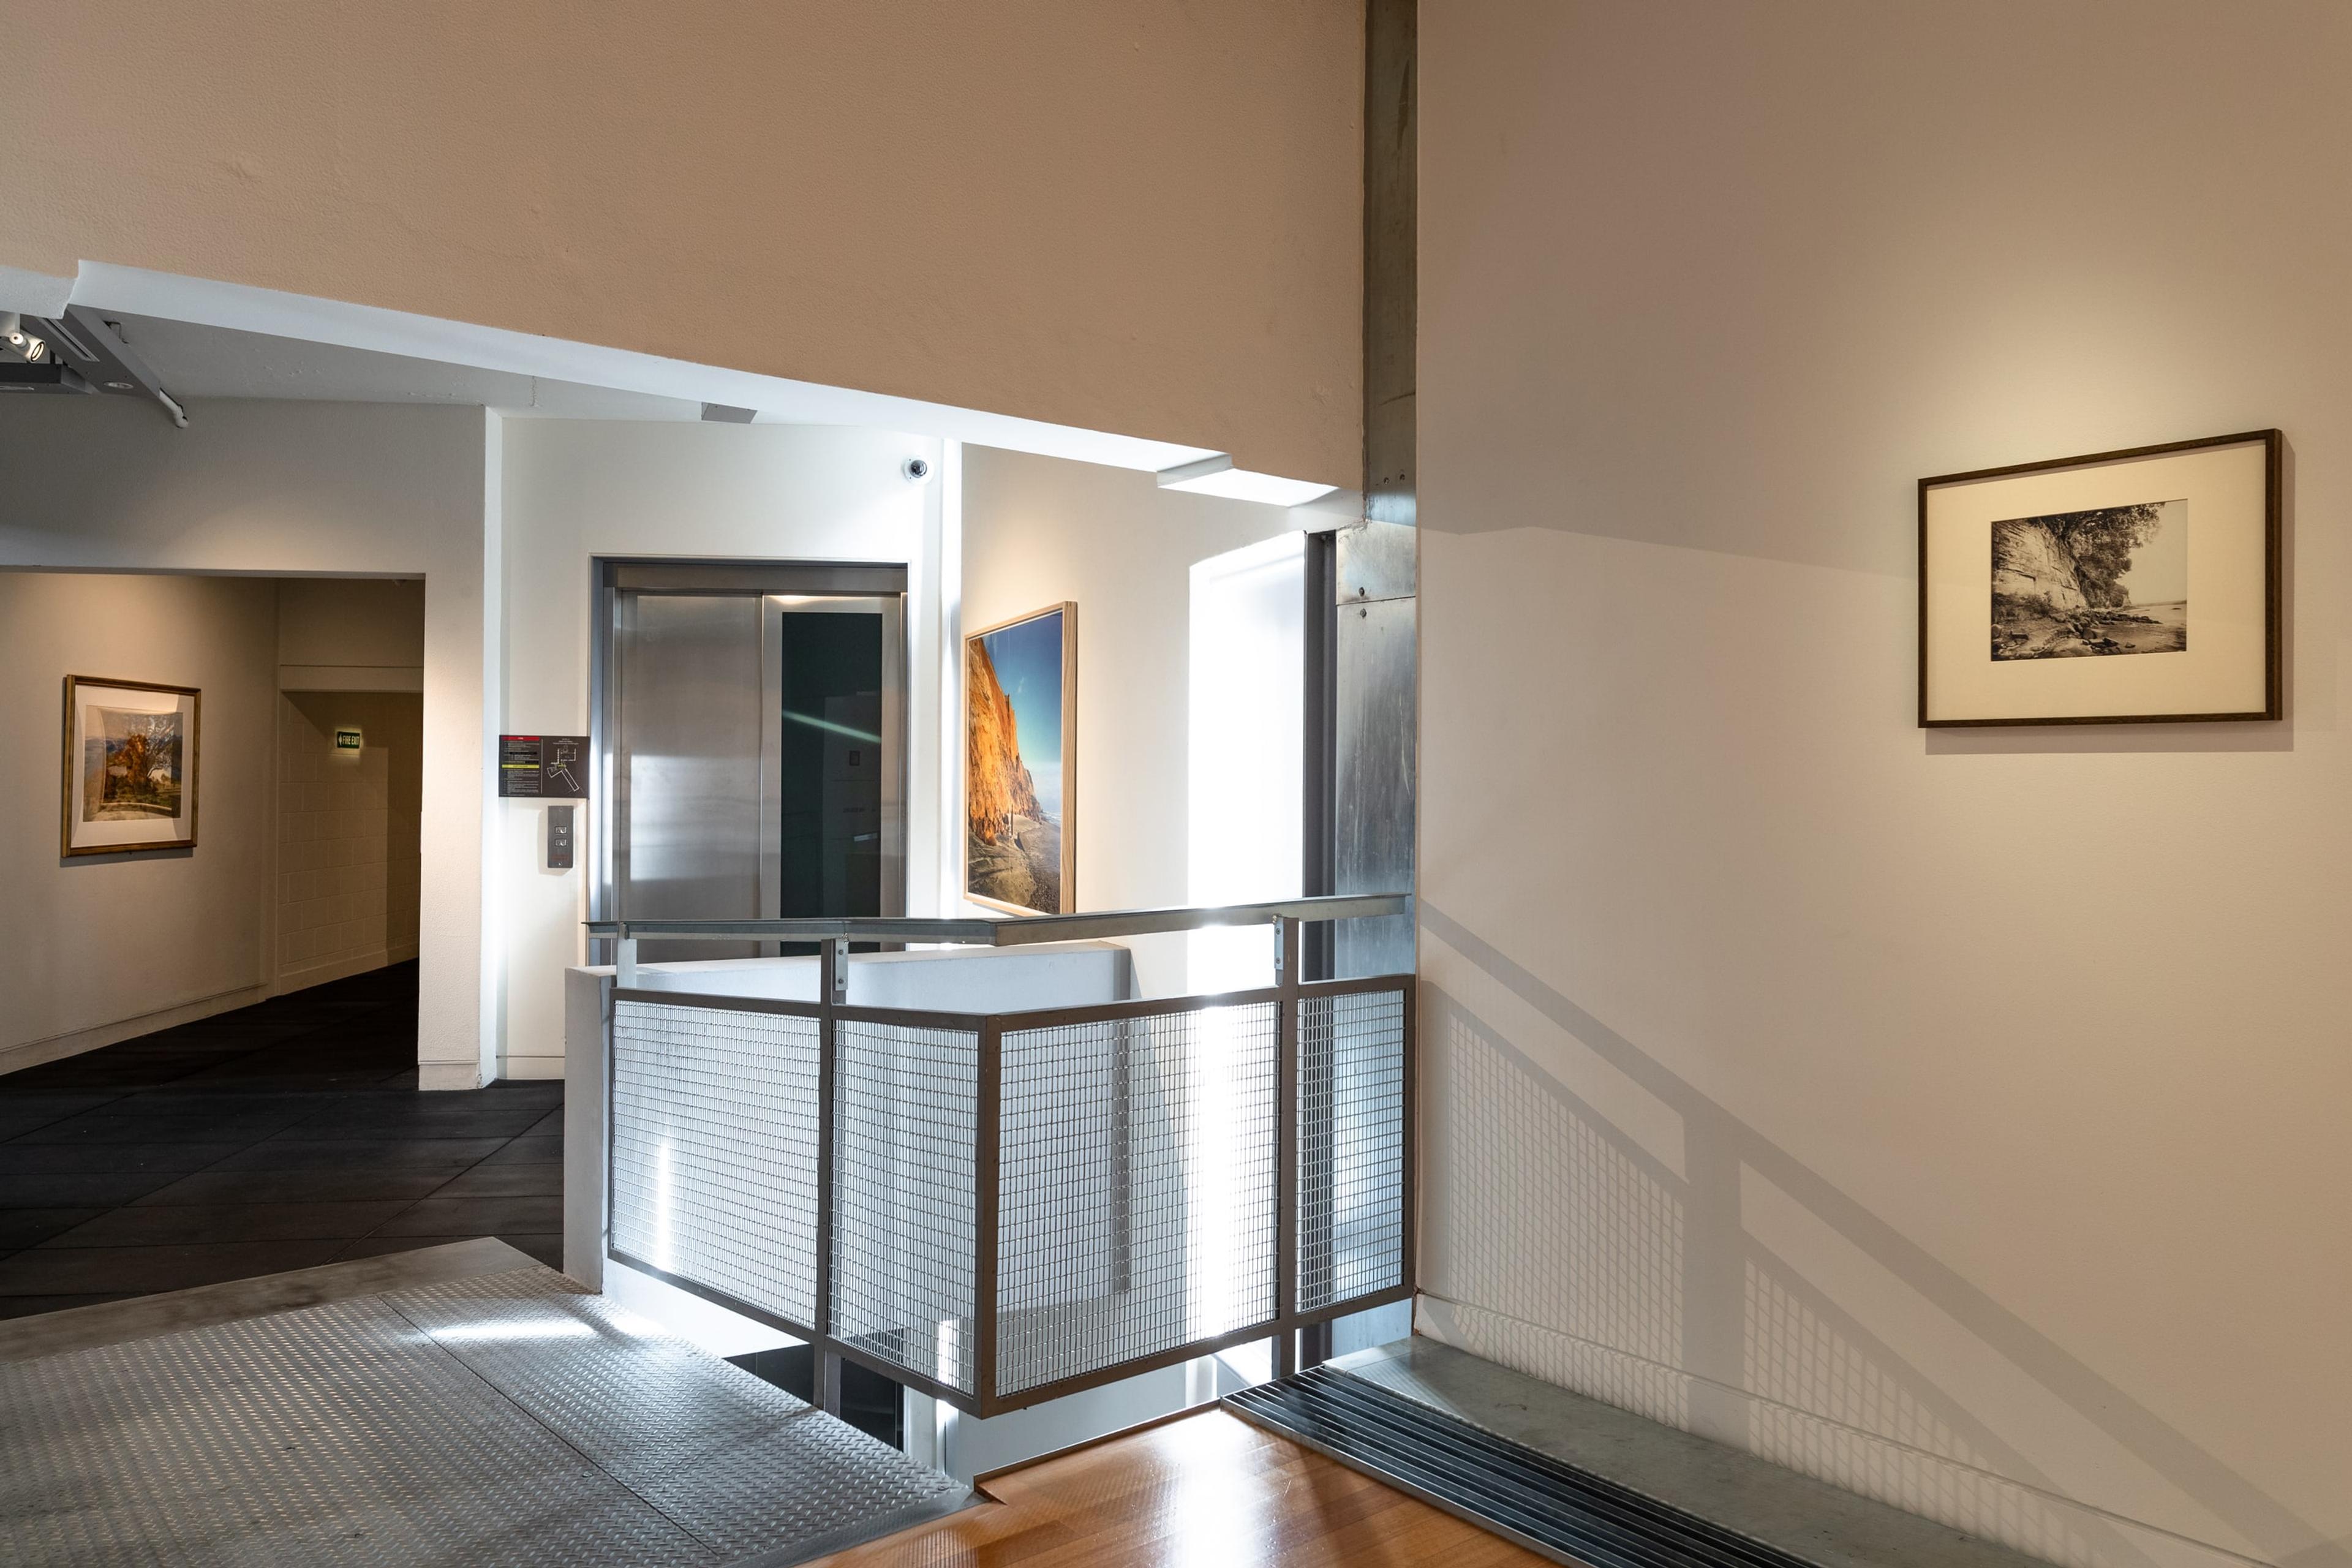 Installation view, Chris Corson-Scott, Landscape Photographs 2013-2018, in Tēnei Ao Tūroa – This Enduring World, Te Pātaka Toi Adam Art Gallery, Te Victoria University Wellington. Photo: Ted Whitaker